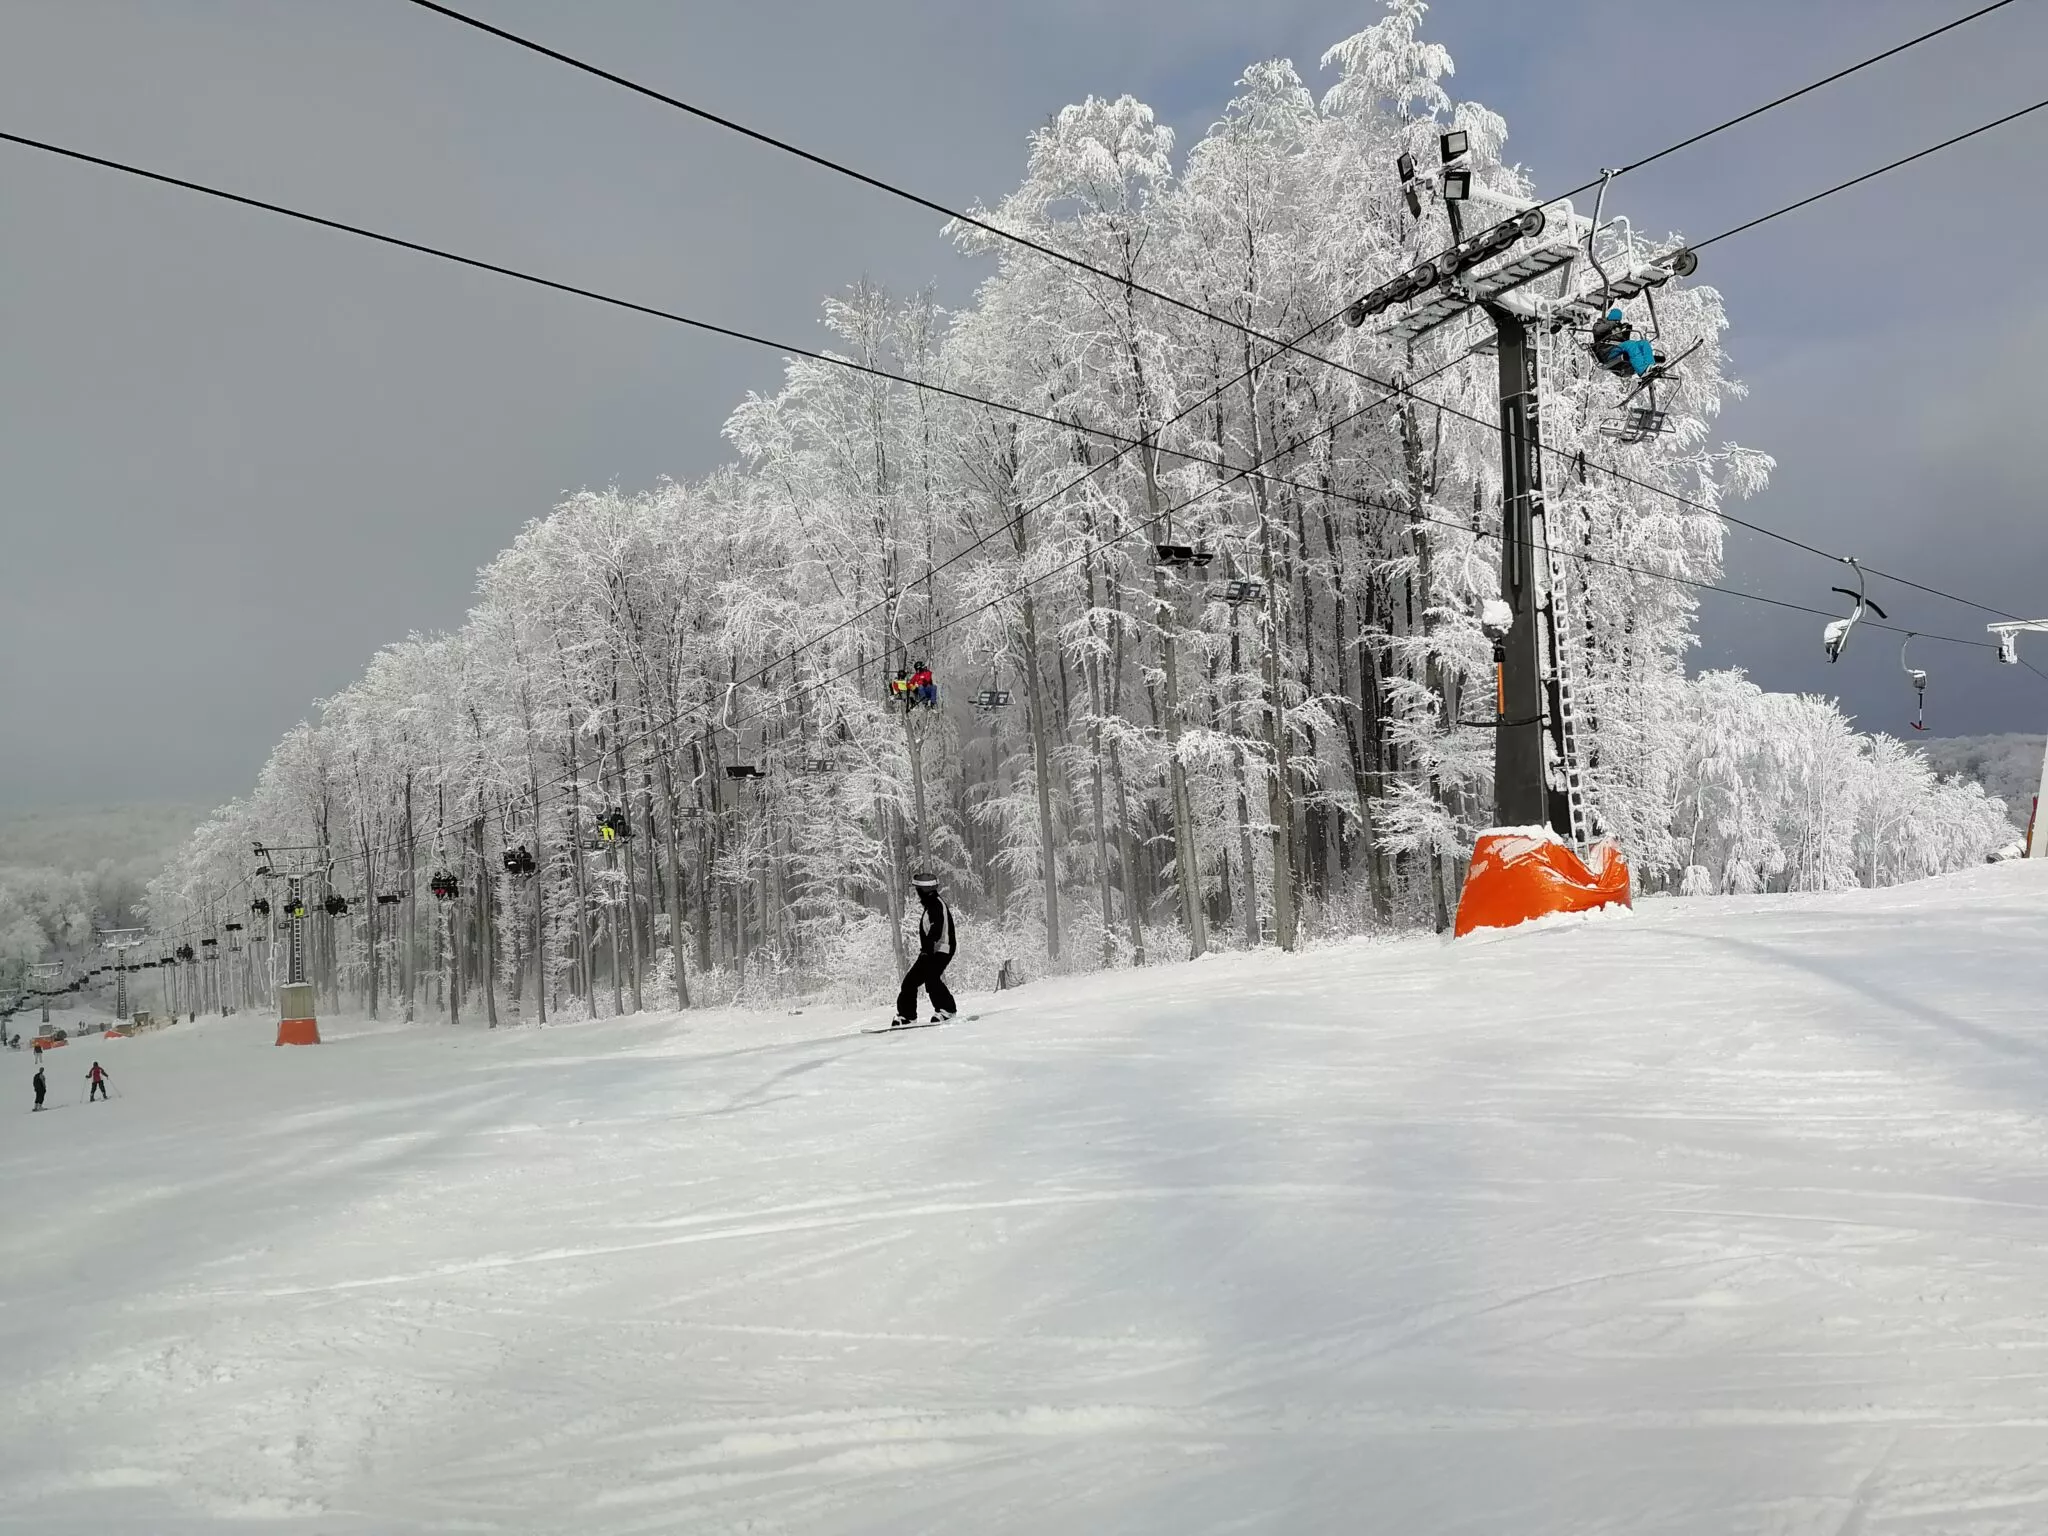 Intersport Siarena Epleny in Hungary, Europe | Snowboarding,Skiing - Rated 3.6